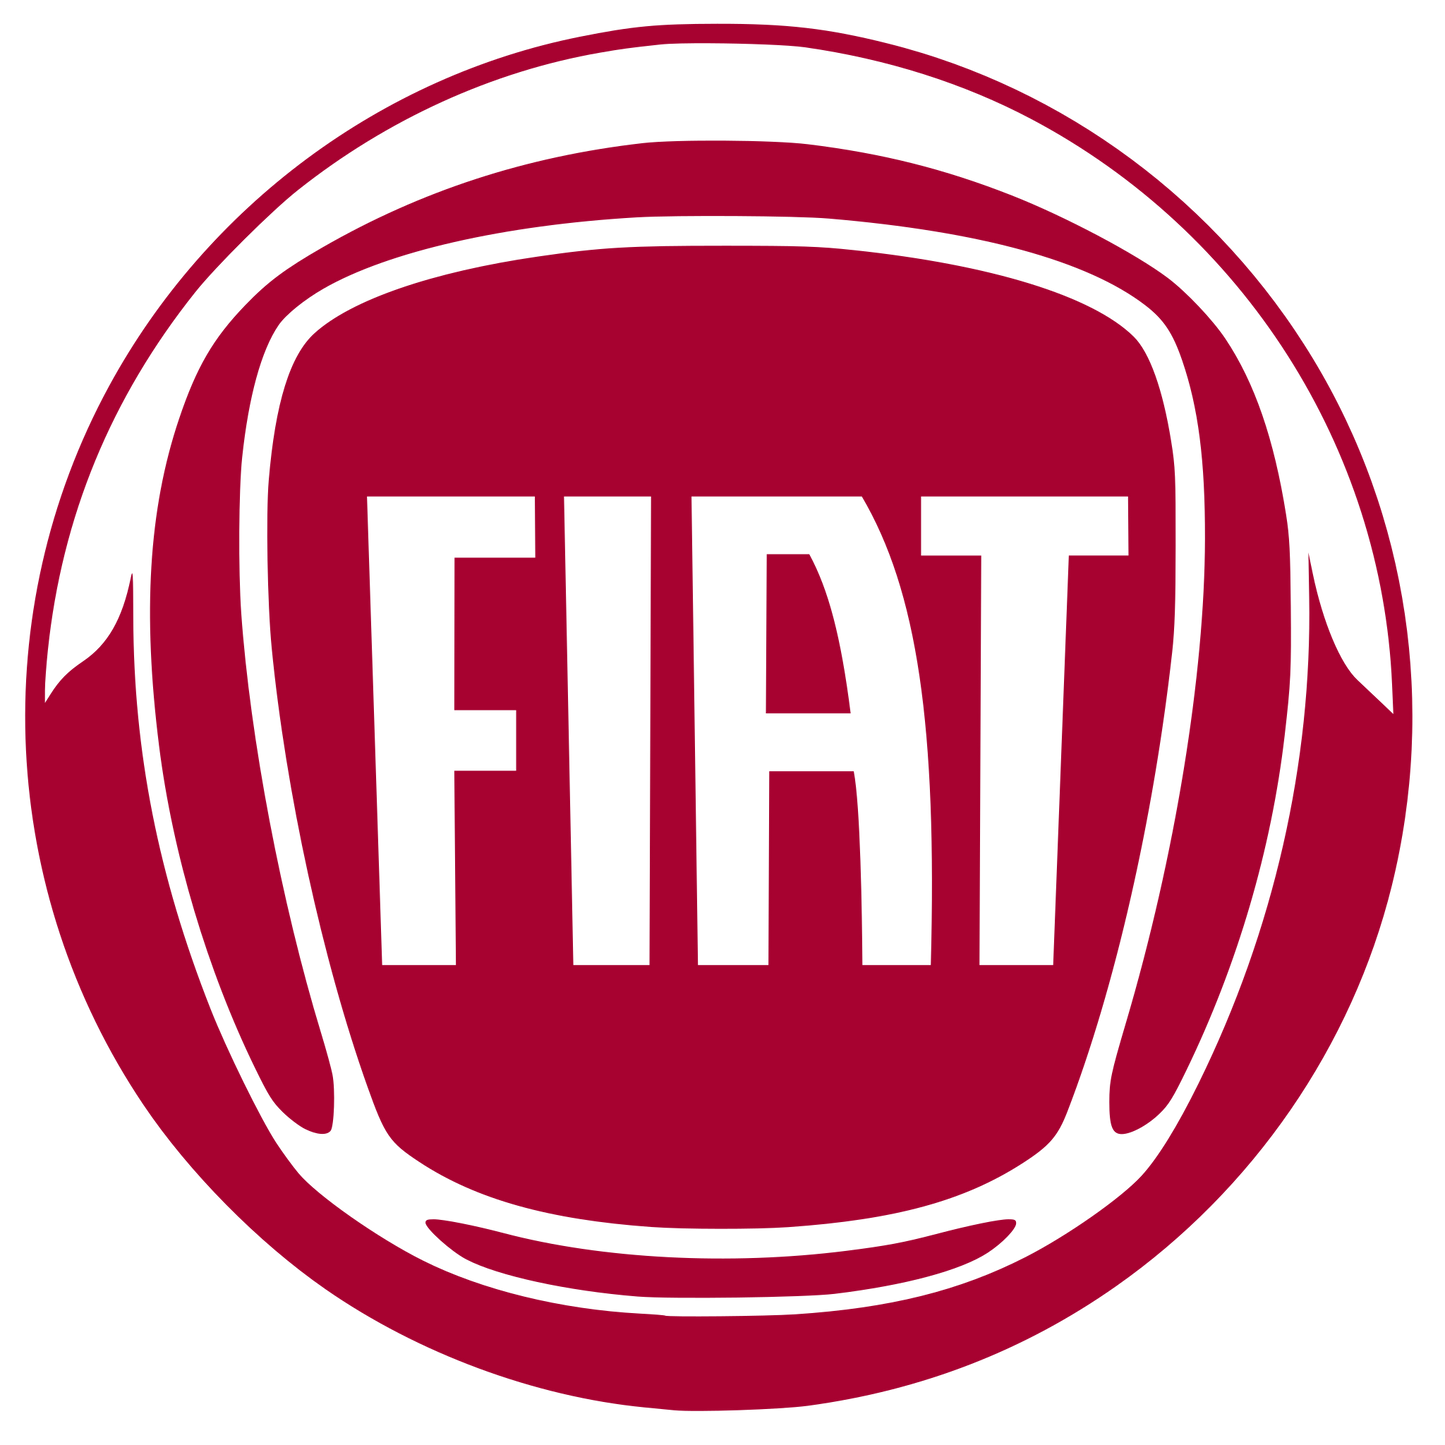 Codice autoradio Fiat